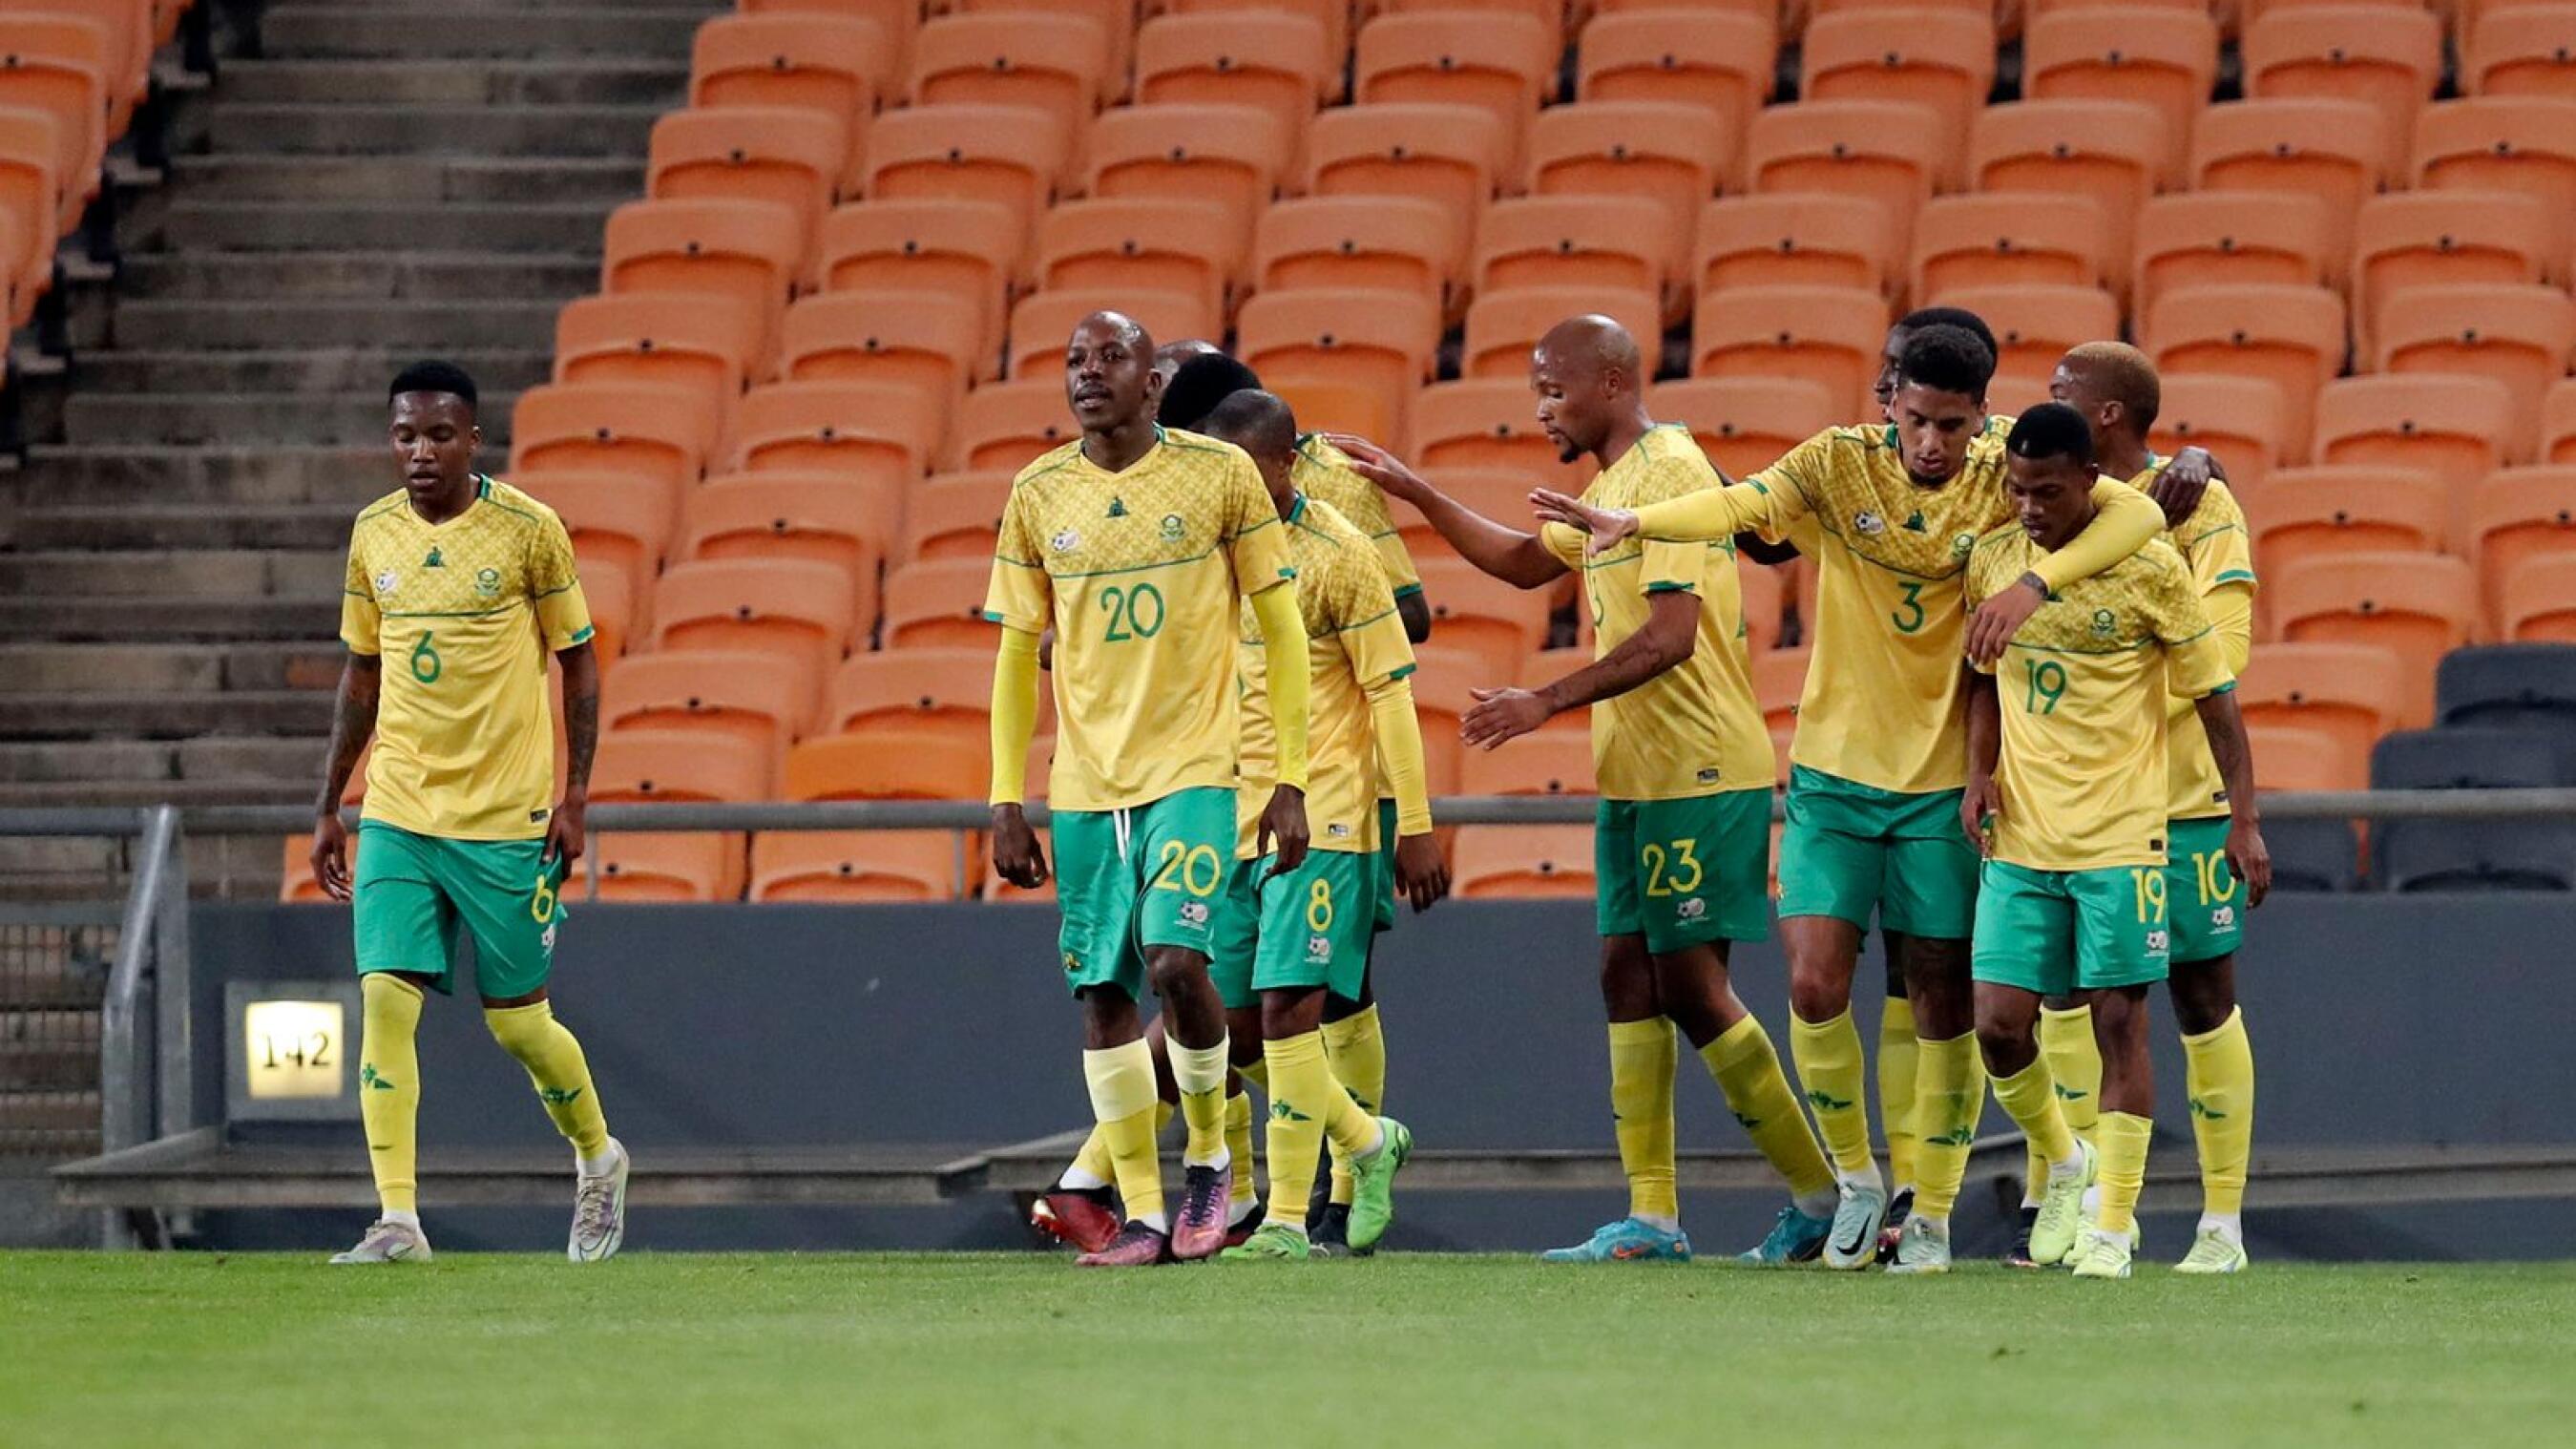 Bafana Bafana players celebrate scoring during their recent friendly international against Botswana